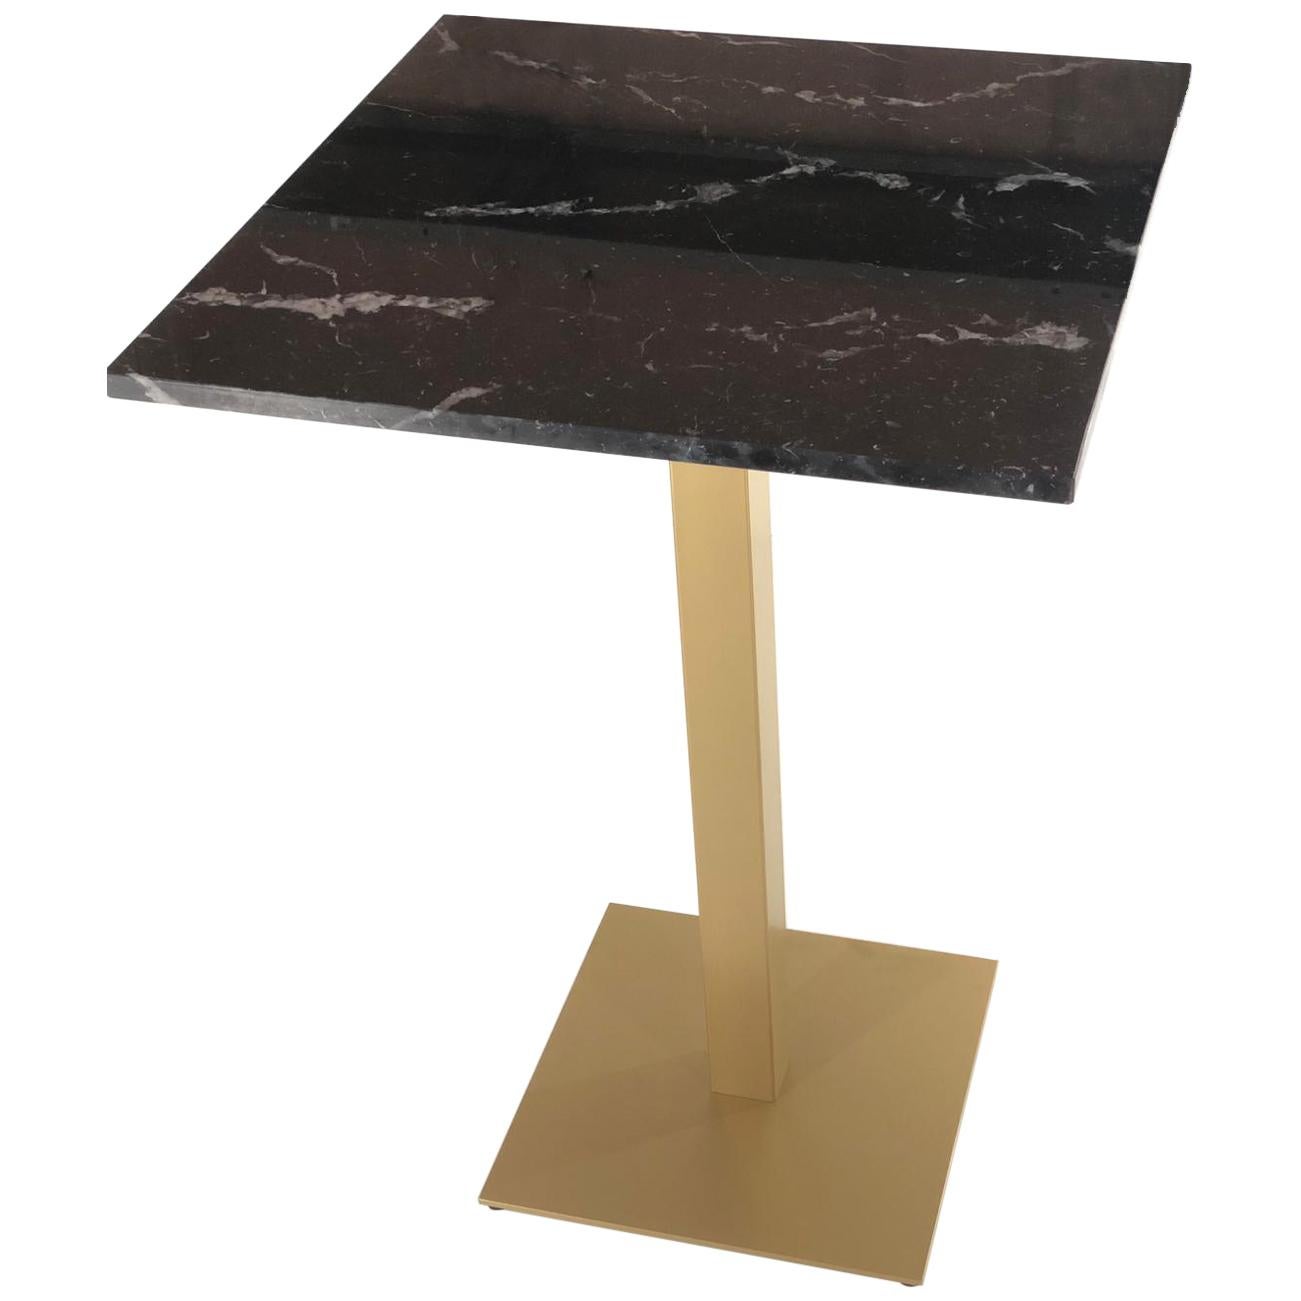 New Bistro High Table in Gilded Wrought Iron with Black Marble Top (table haute bistro en fer forgé doré avec plateau en marbre noir). Indoor & Out